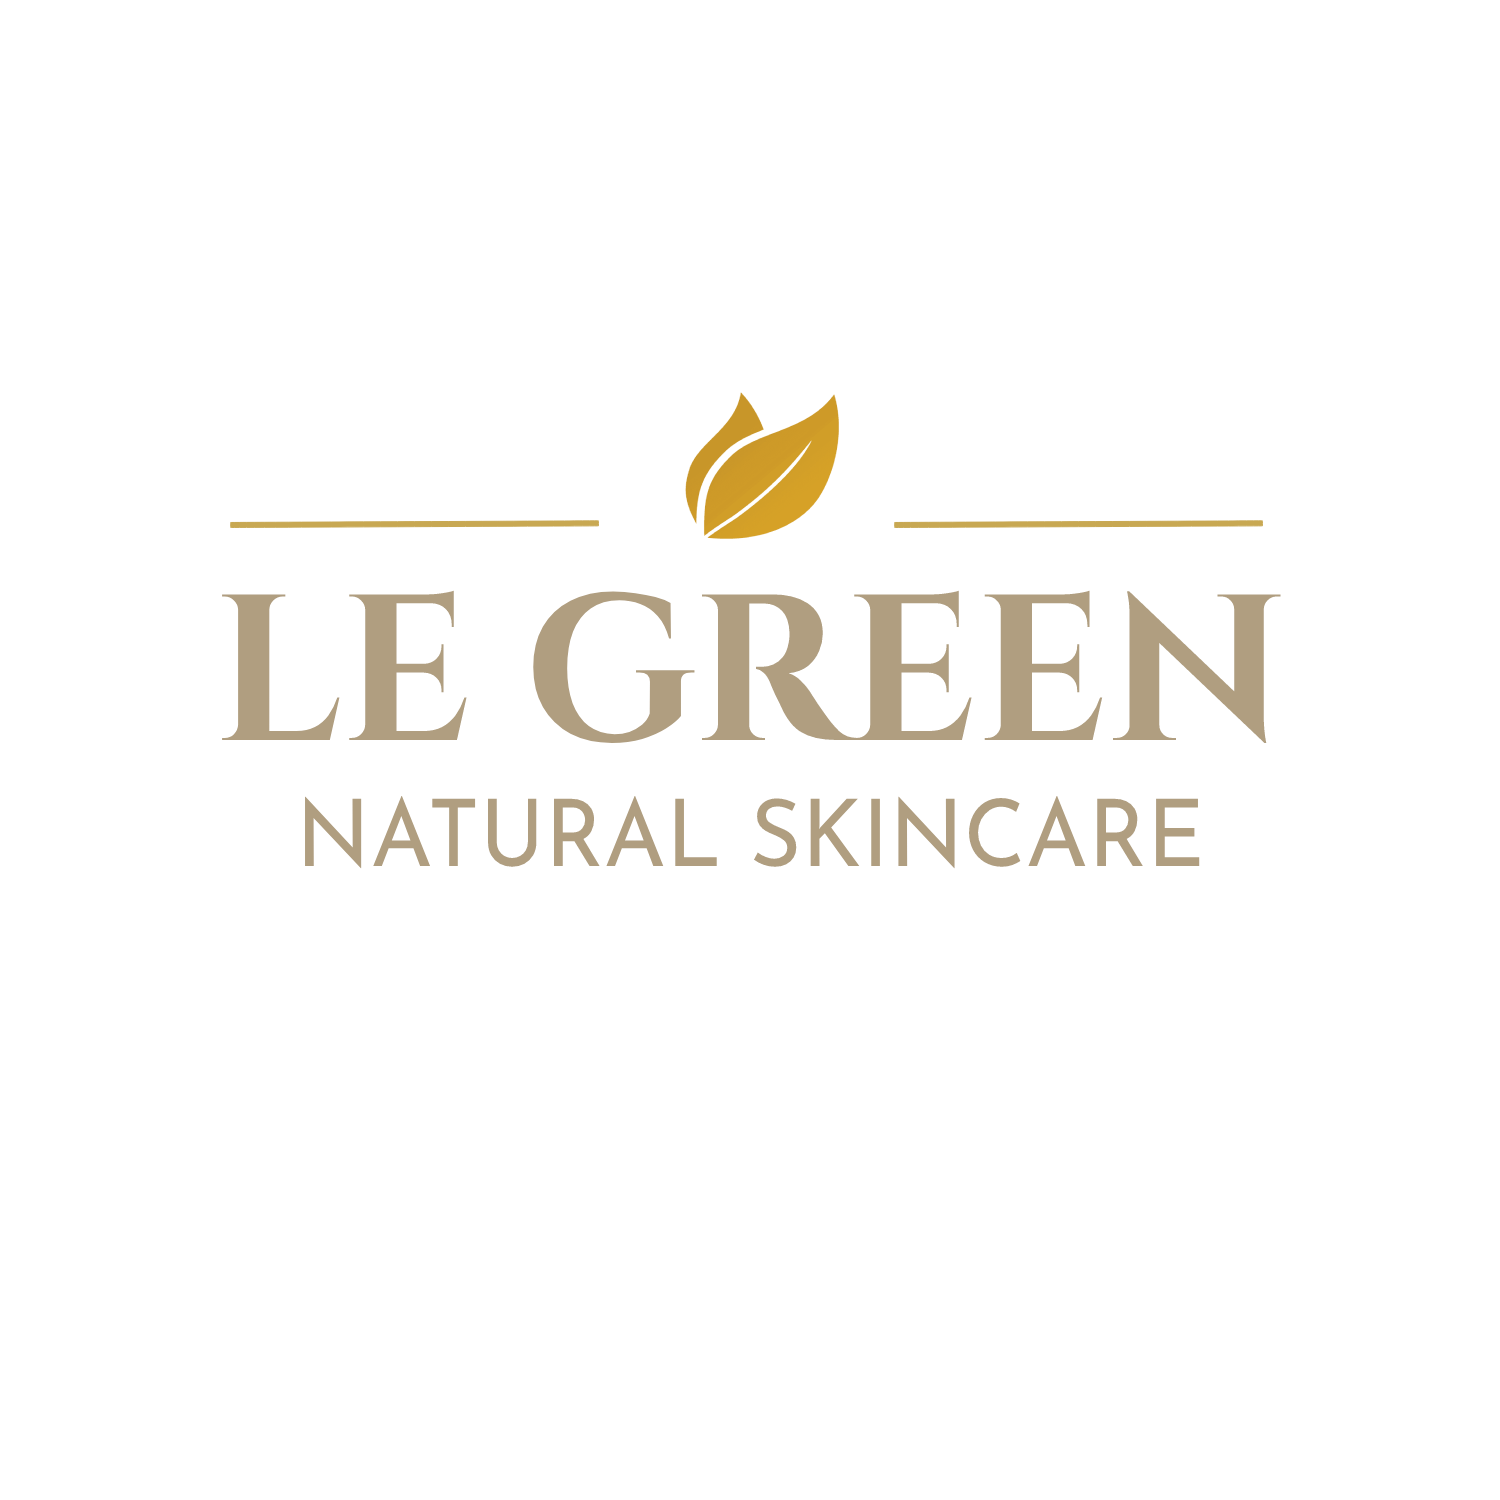 Le Green Natural Skincare